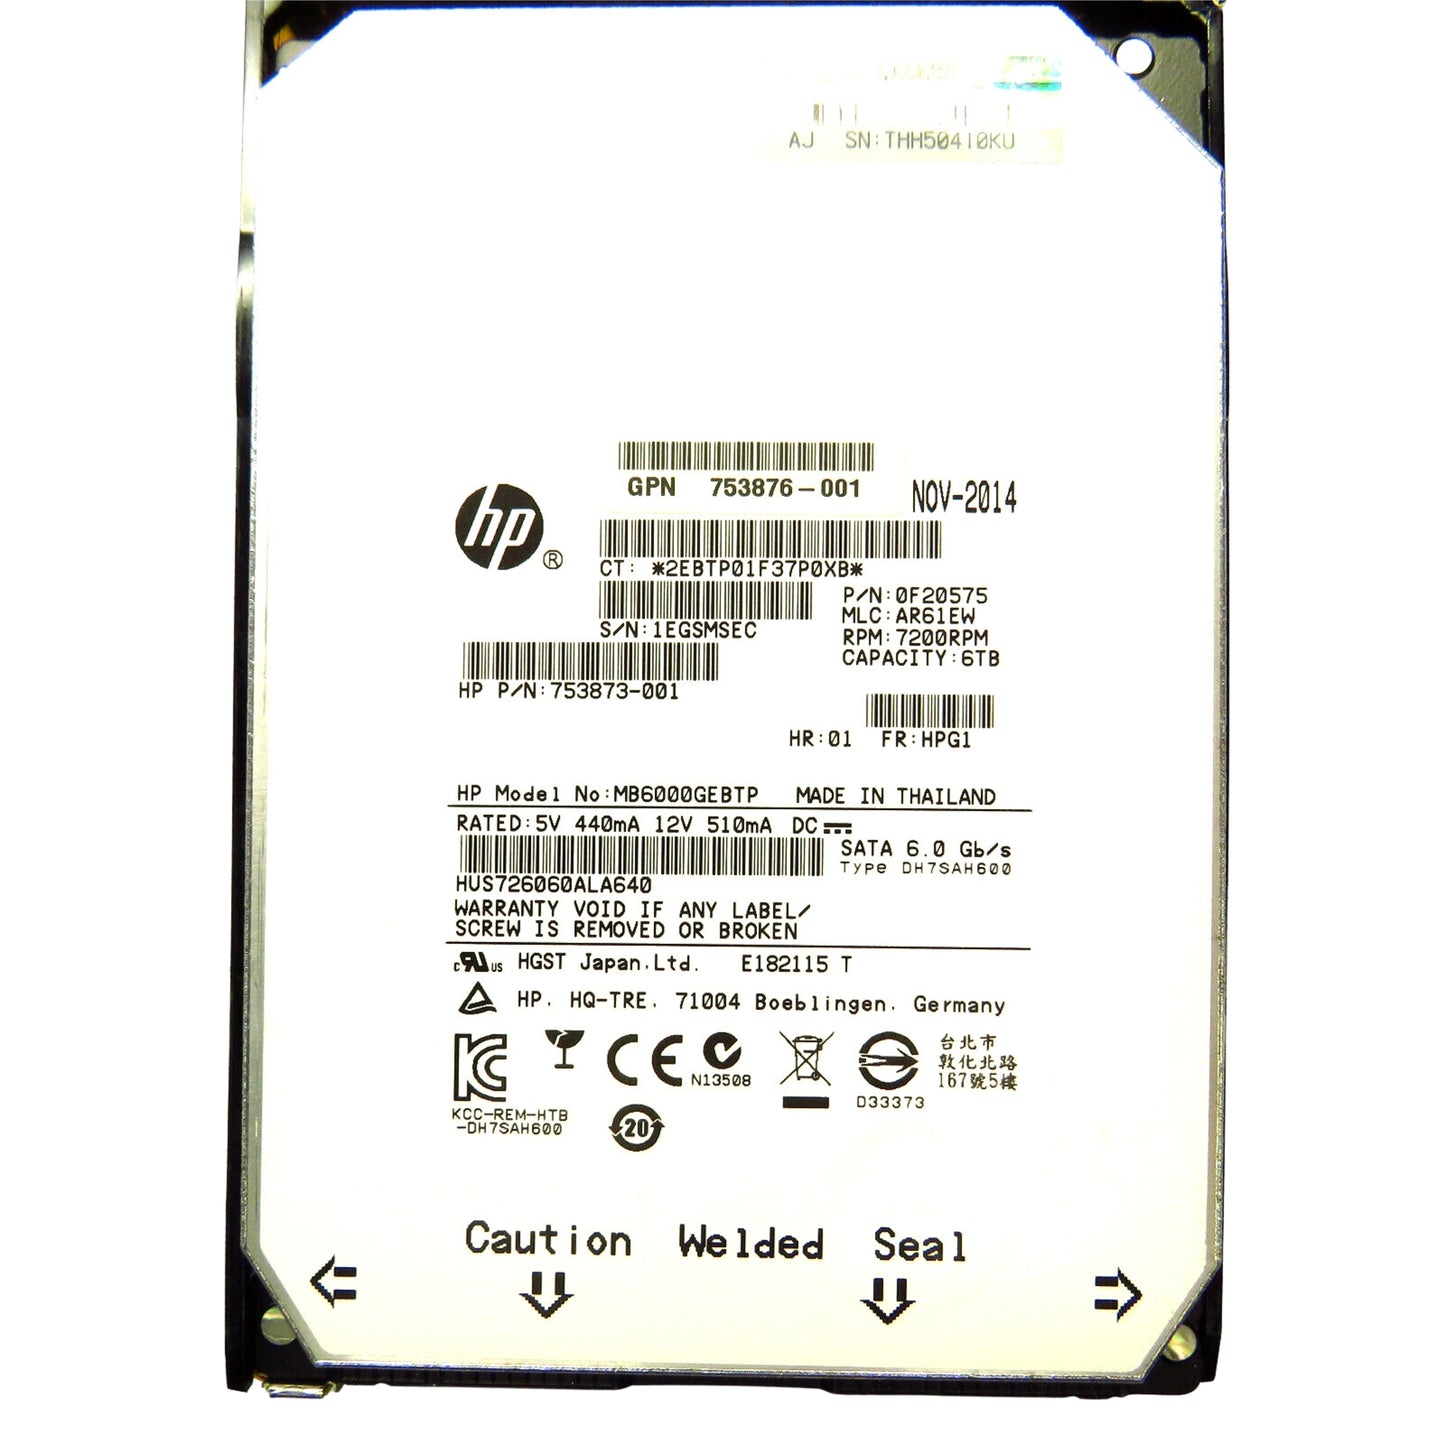 HP 761496-001 3.5" 6TB 7200RPM SATA III Hard Disk Drive (HDD), Silver (Refurbished)